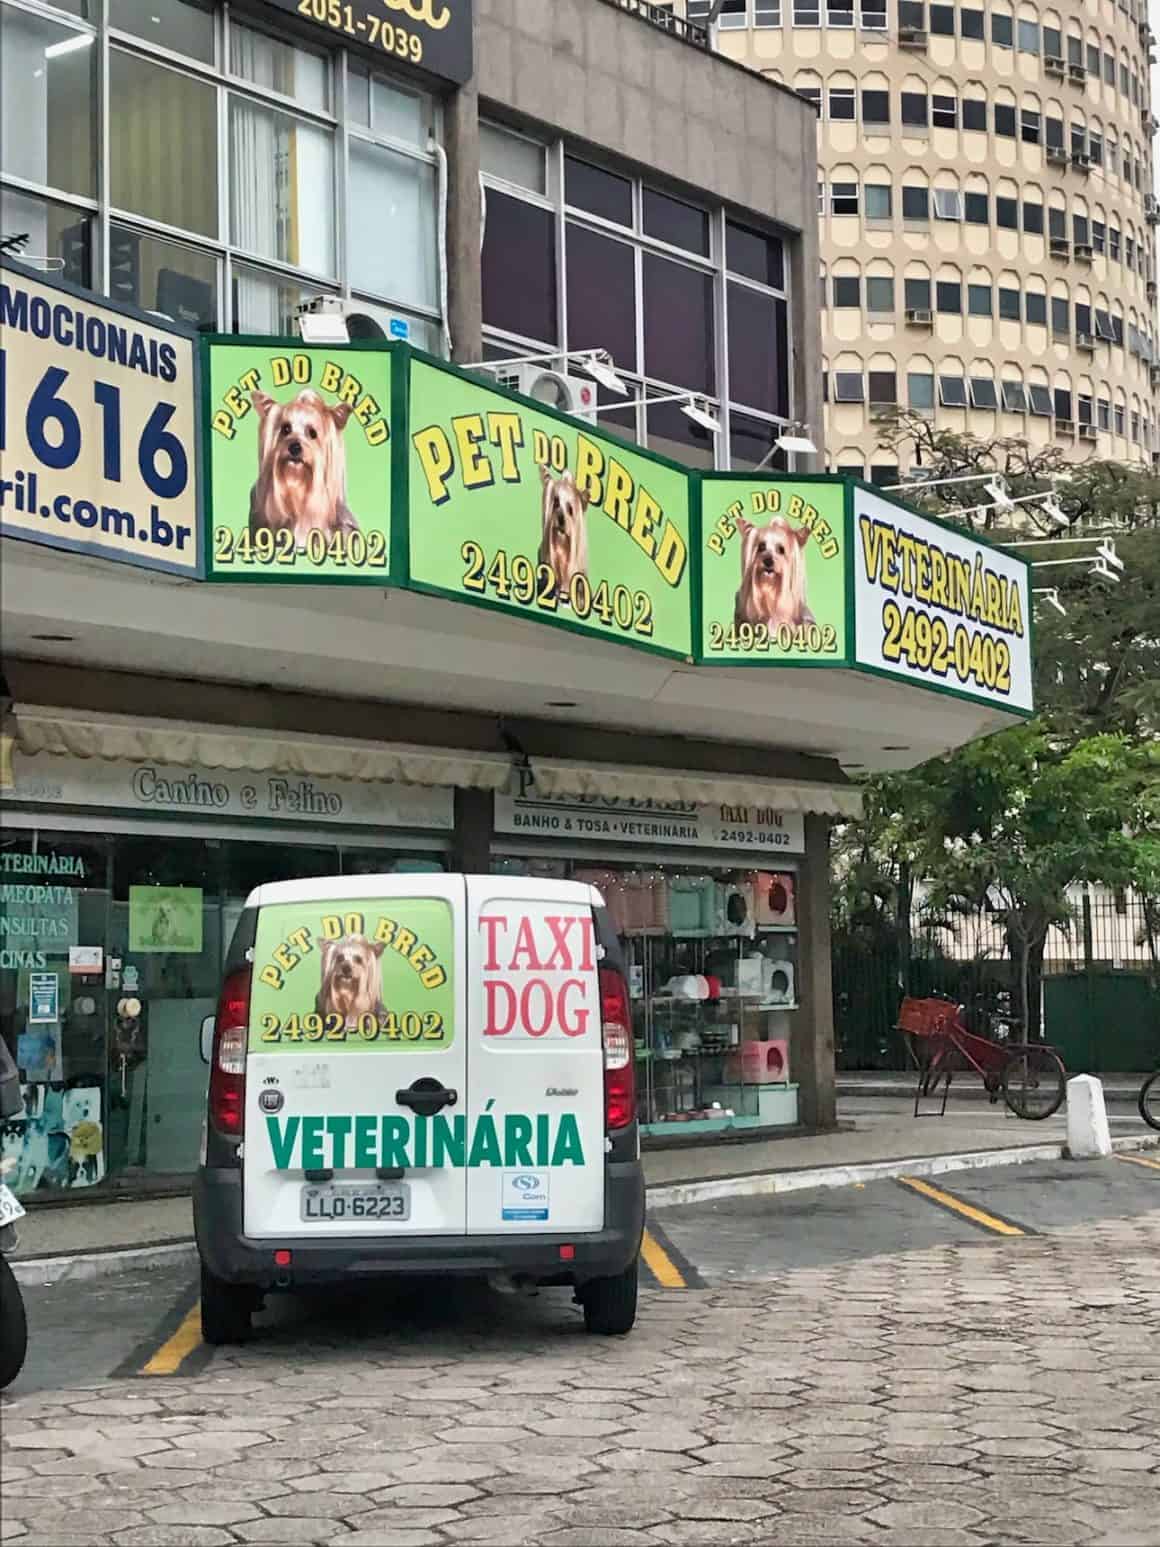 Pet Do Bred Veterinaria Taxi Dog Barra Da Tijuca